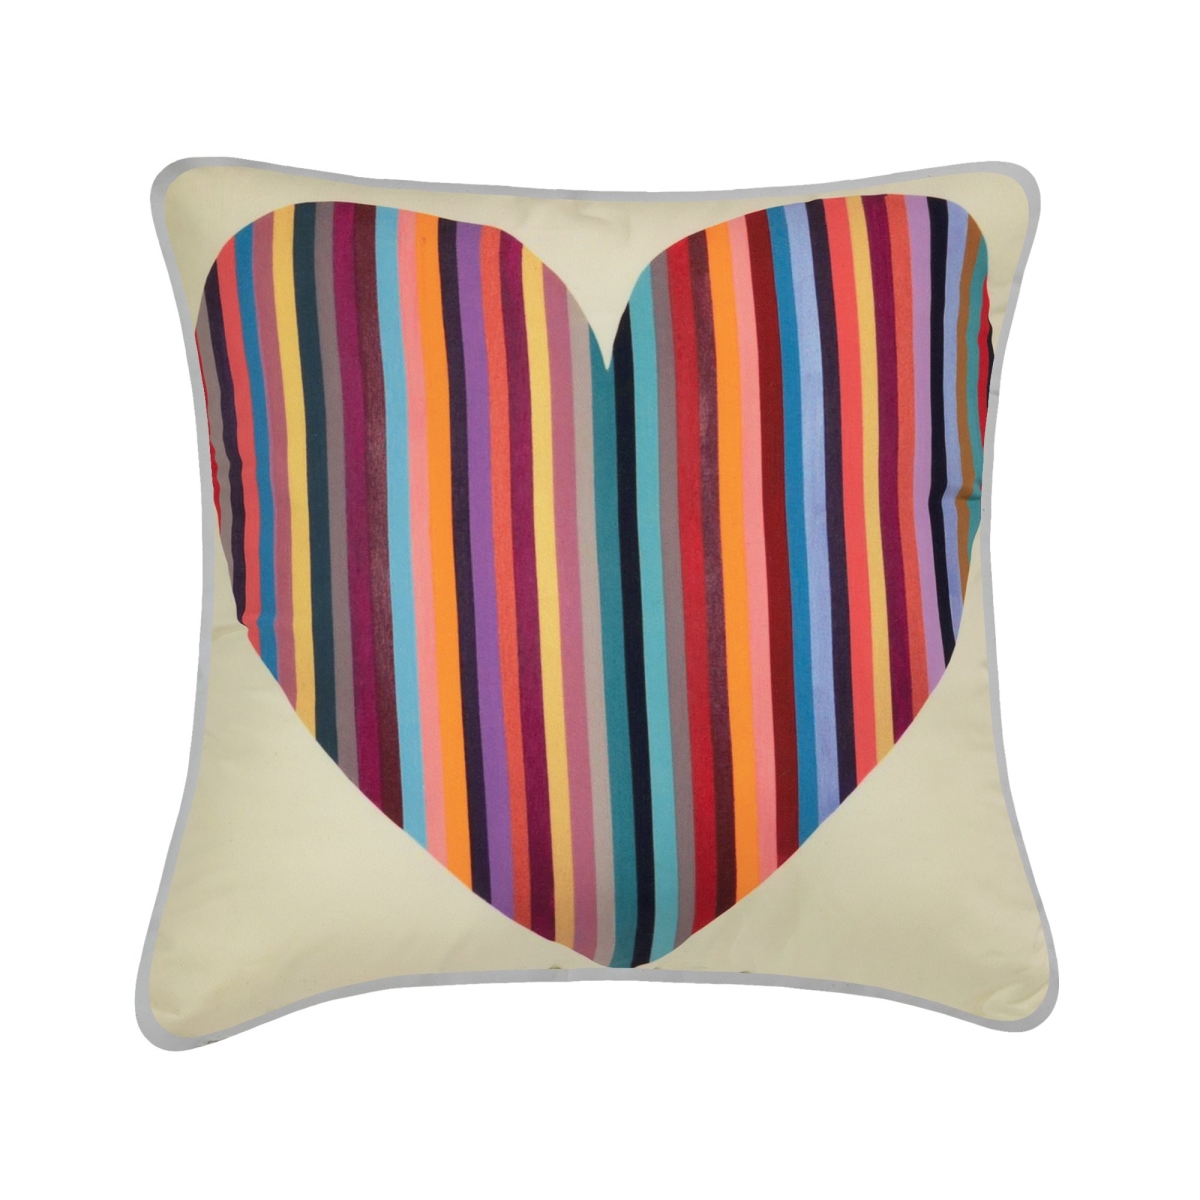 Sq-pi-jg-fther-rahe-1818 18 X 18 In. Jessica Gorlicky Rainbow Heart Decorative Cushion - 100 Percent Duck Feather